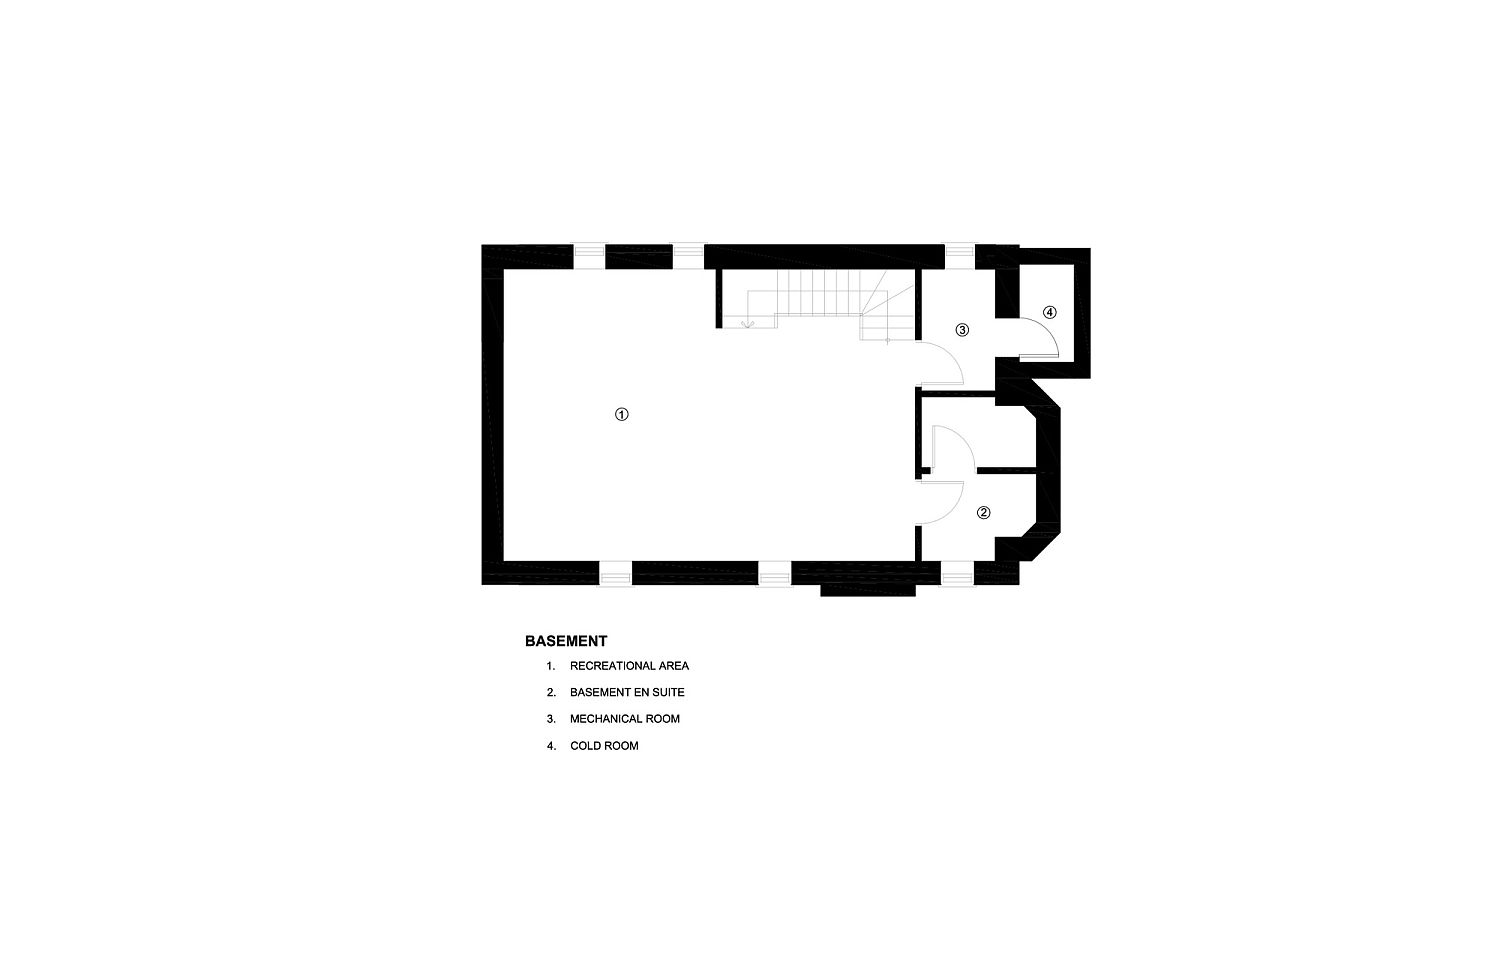 Basement-floor-plan-of-the-Art-House